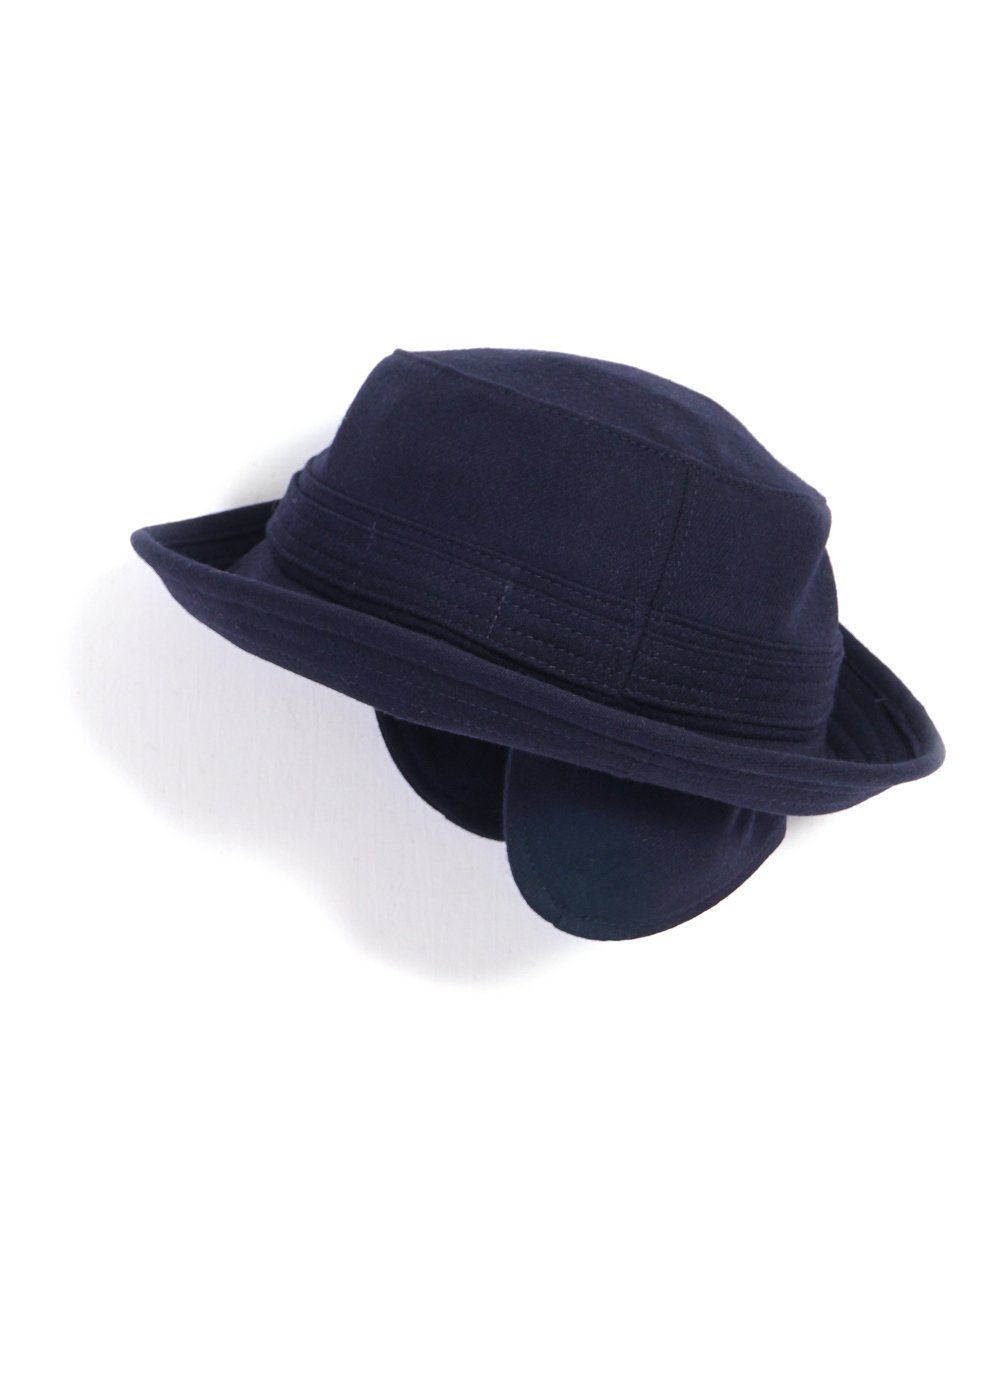 HANSEN Garments - EDVARD | Bucket Hat With Earflaps | Navy - HANSEN Garments